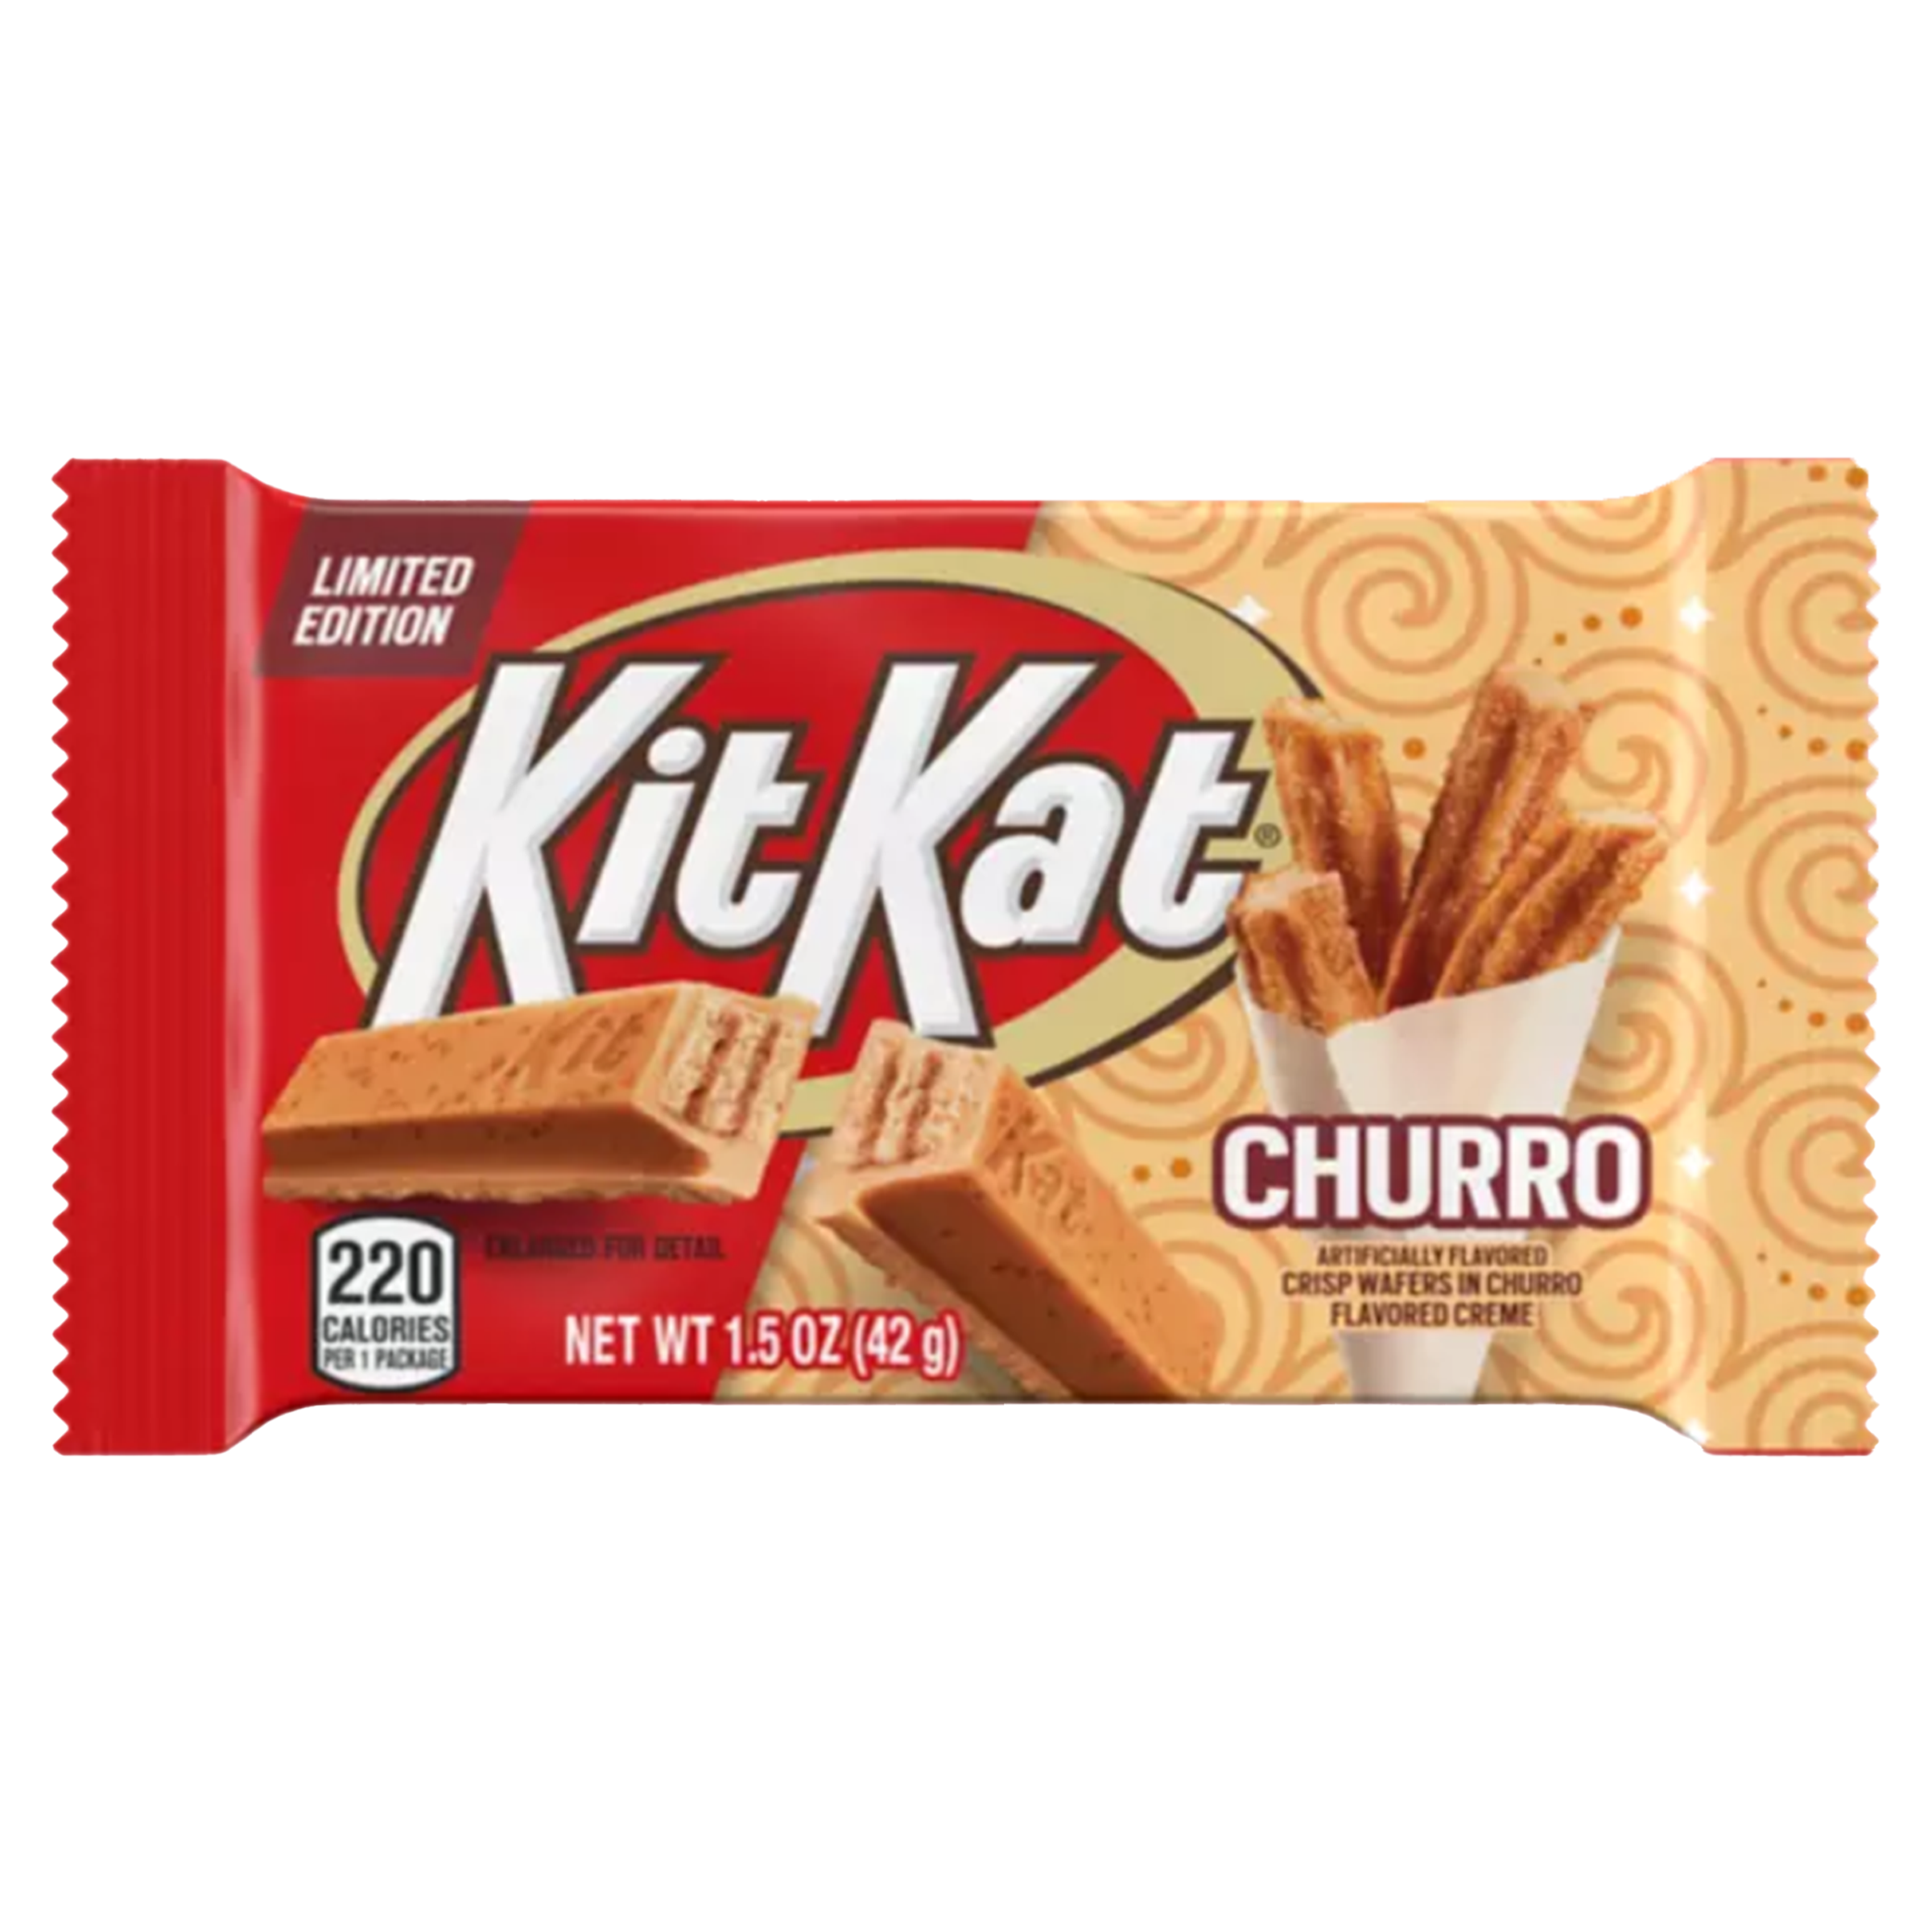 Kit Kat - Churro Candy Bar